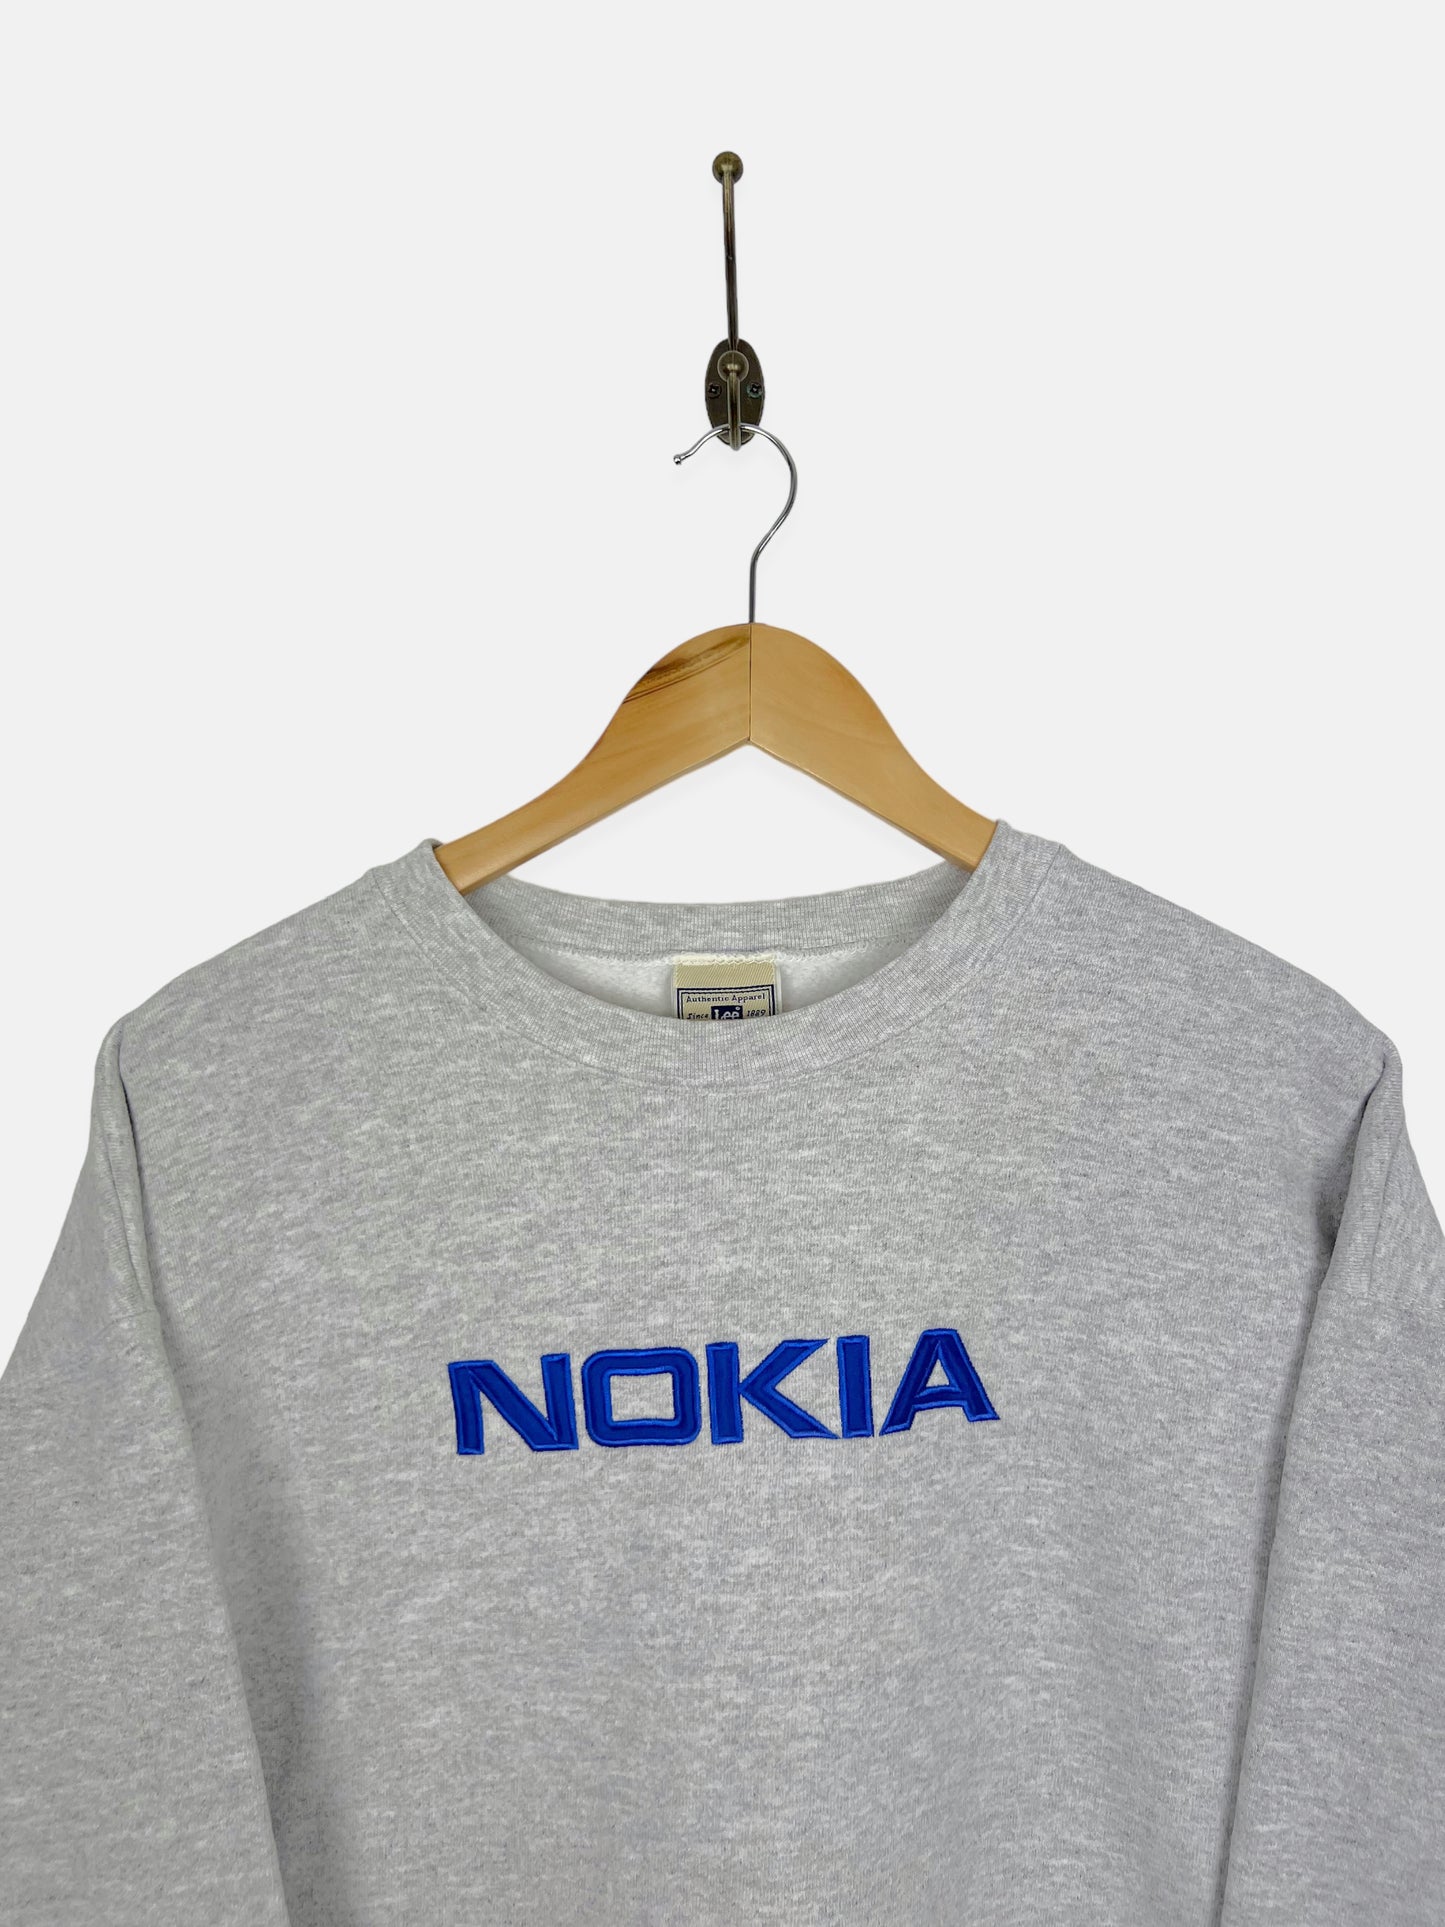 90's Nokia Embroidered Vintage Sweatshirt Size M